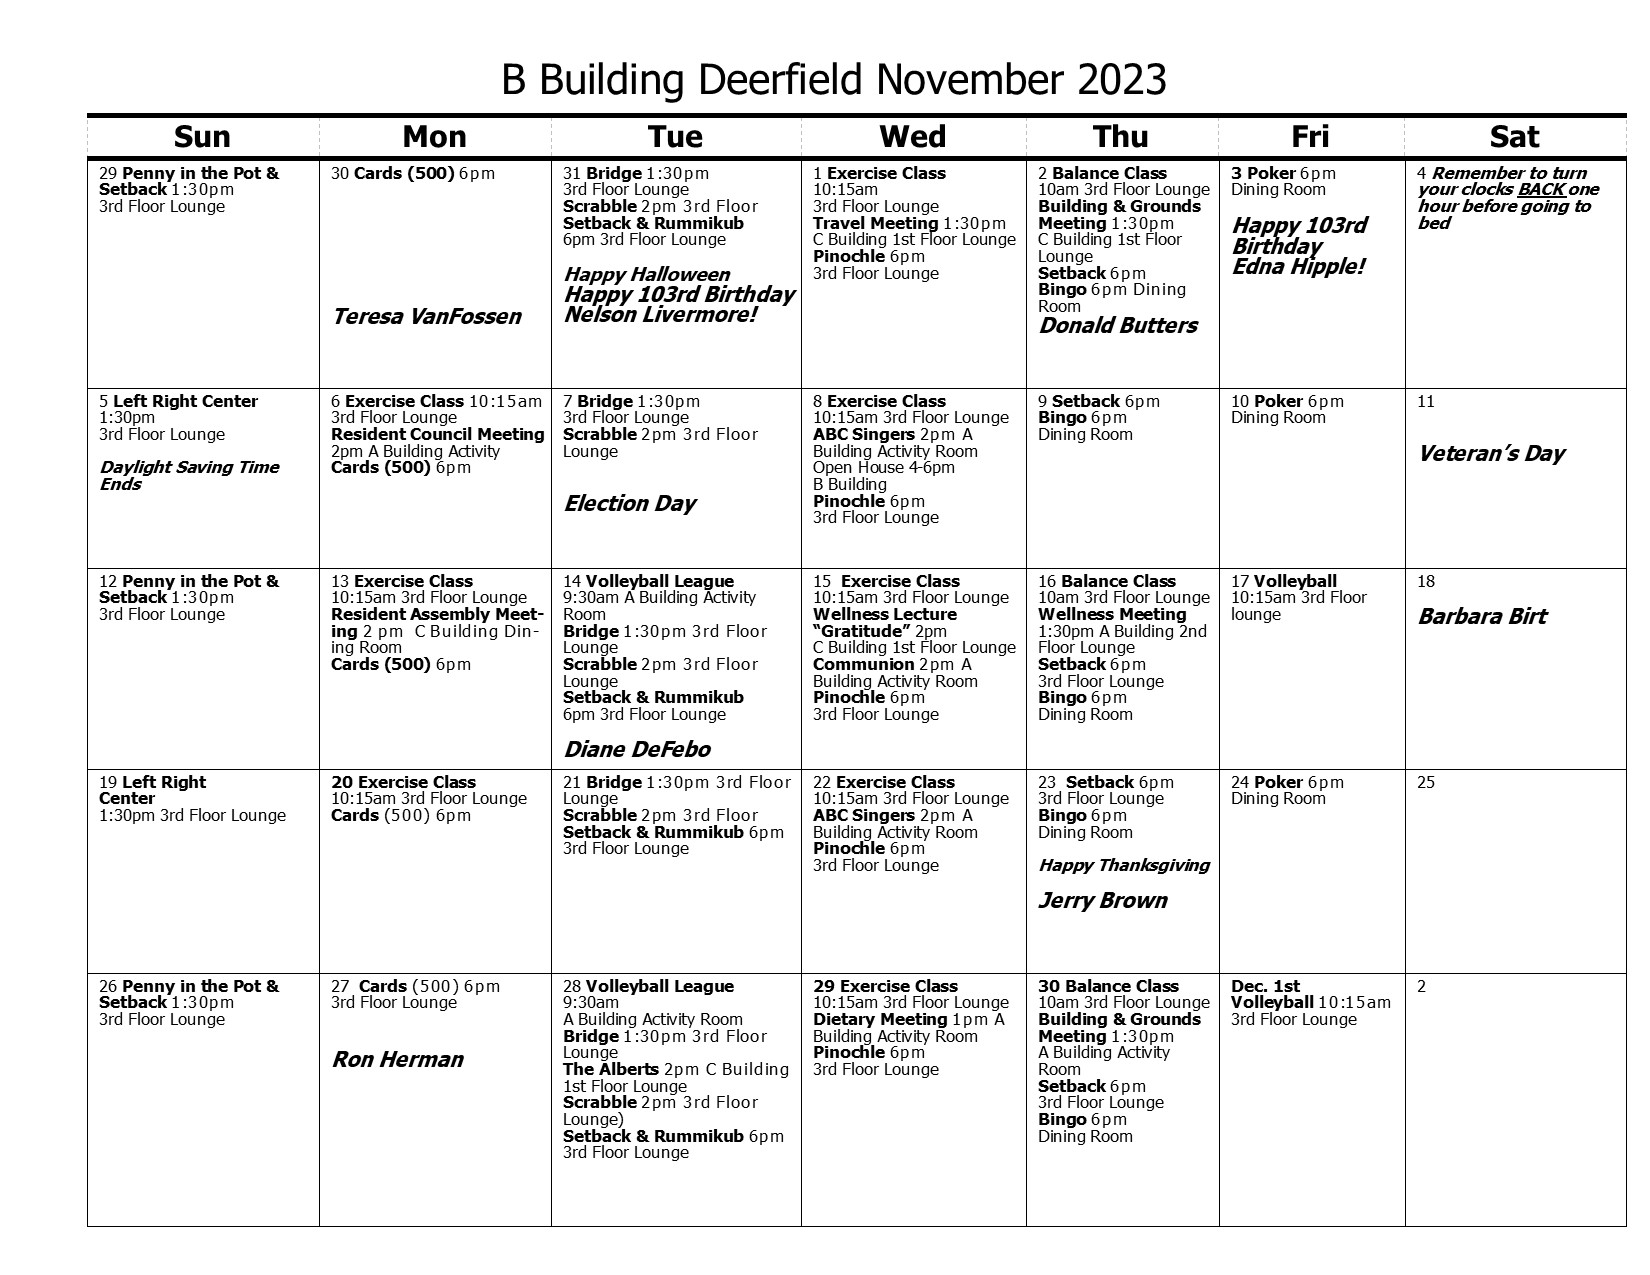 B Building Calendar November 2023